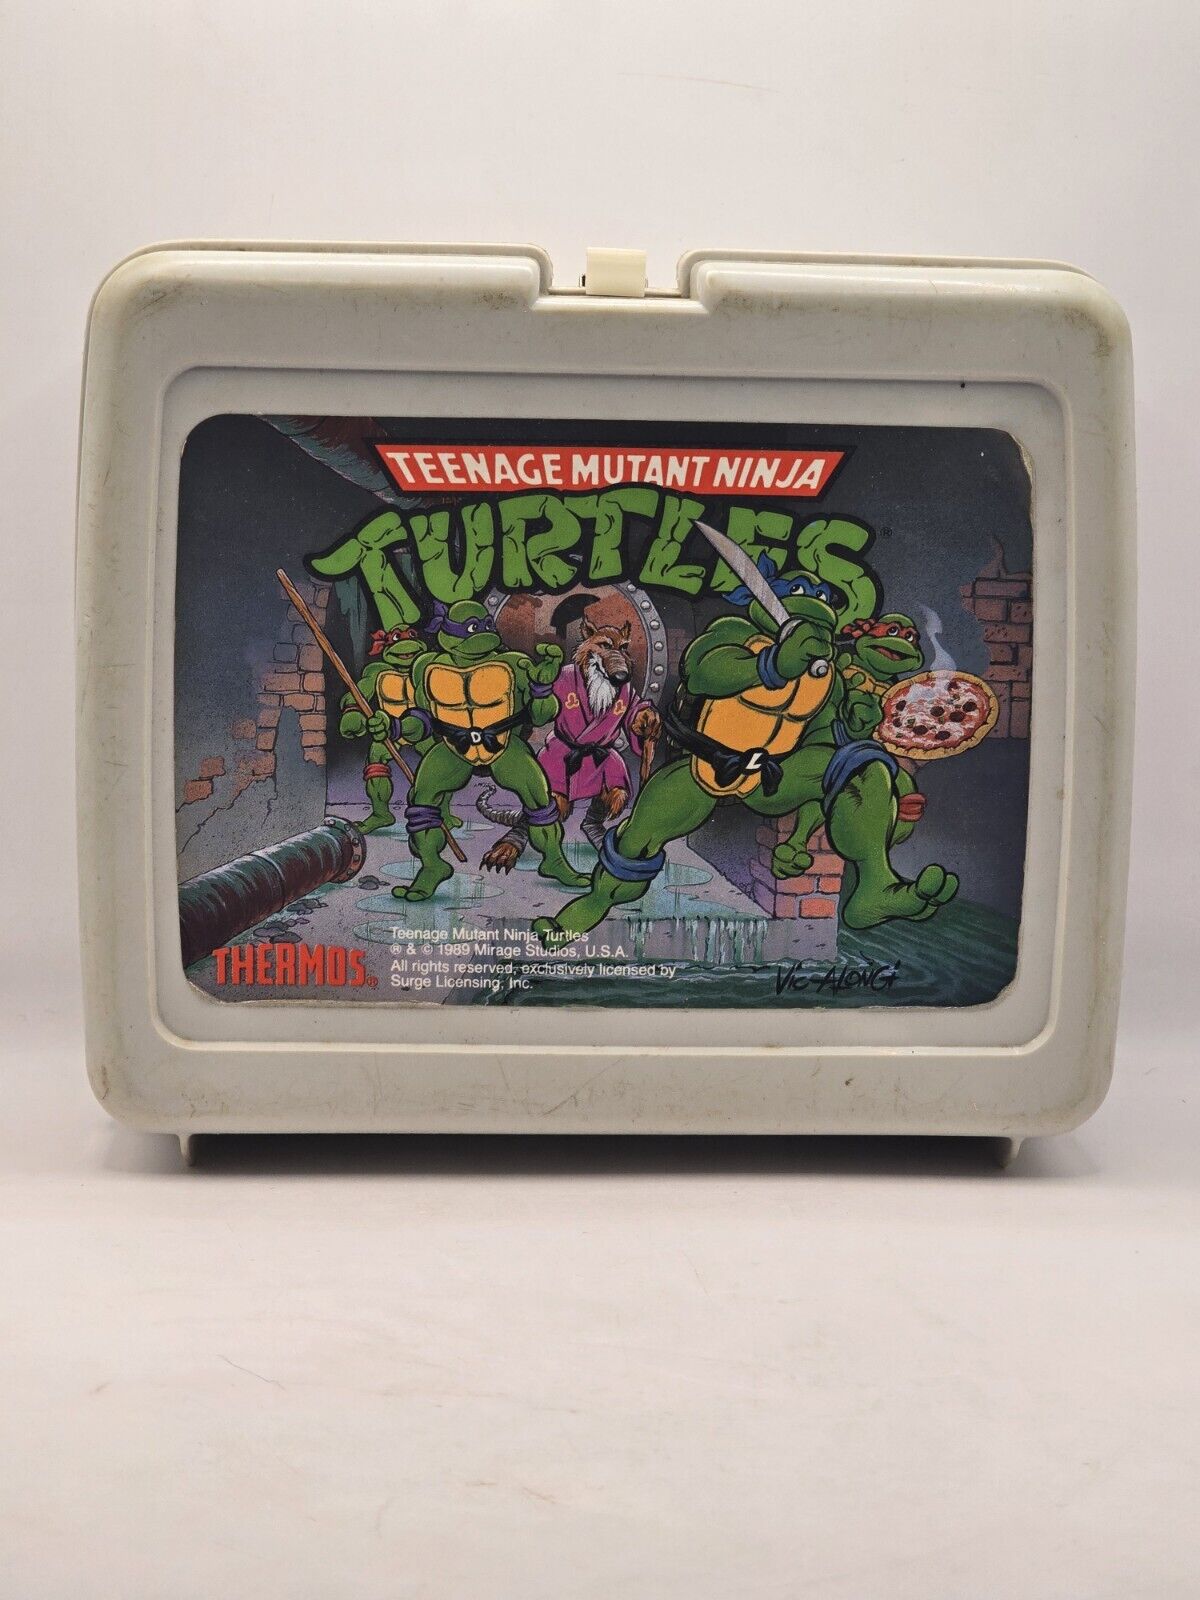 1989 Grey Vintage Teenage Mutant Ninja Turtles Lunch Box (No Thermos Bottle)